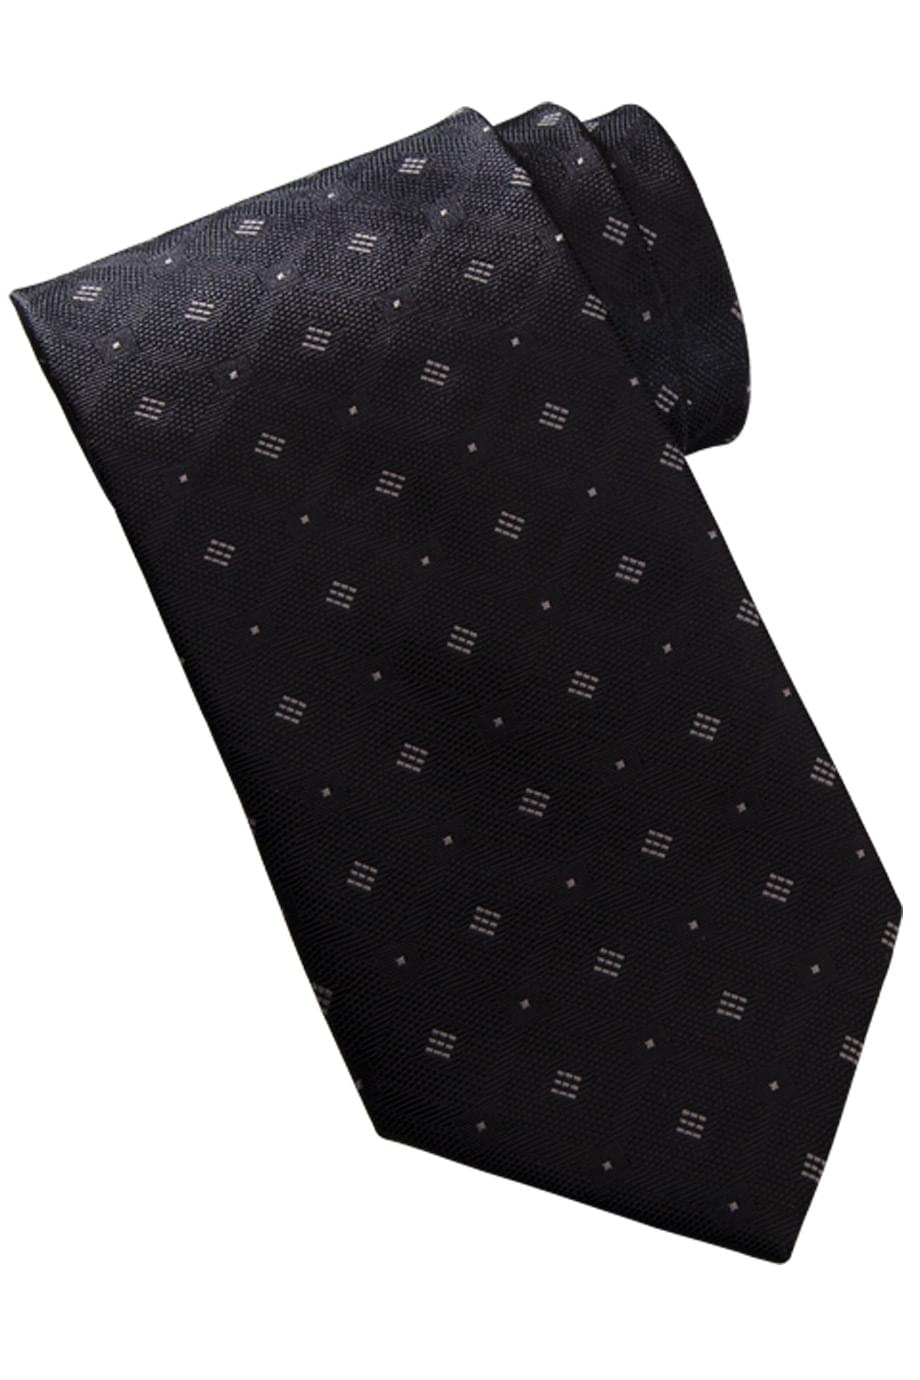 Edwards Garment DT00 - Men's Dot And Diamond Pattern Tie